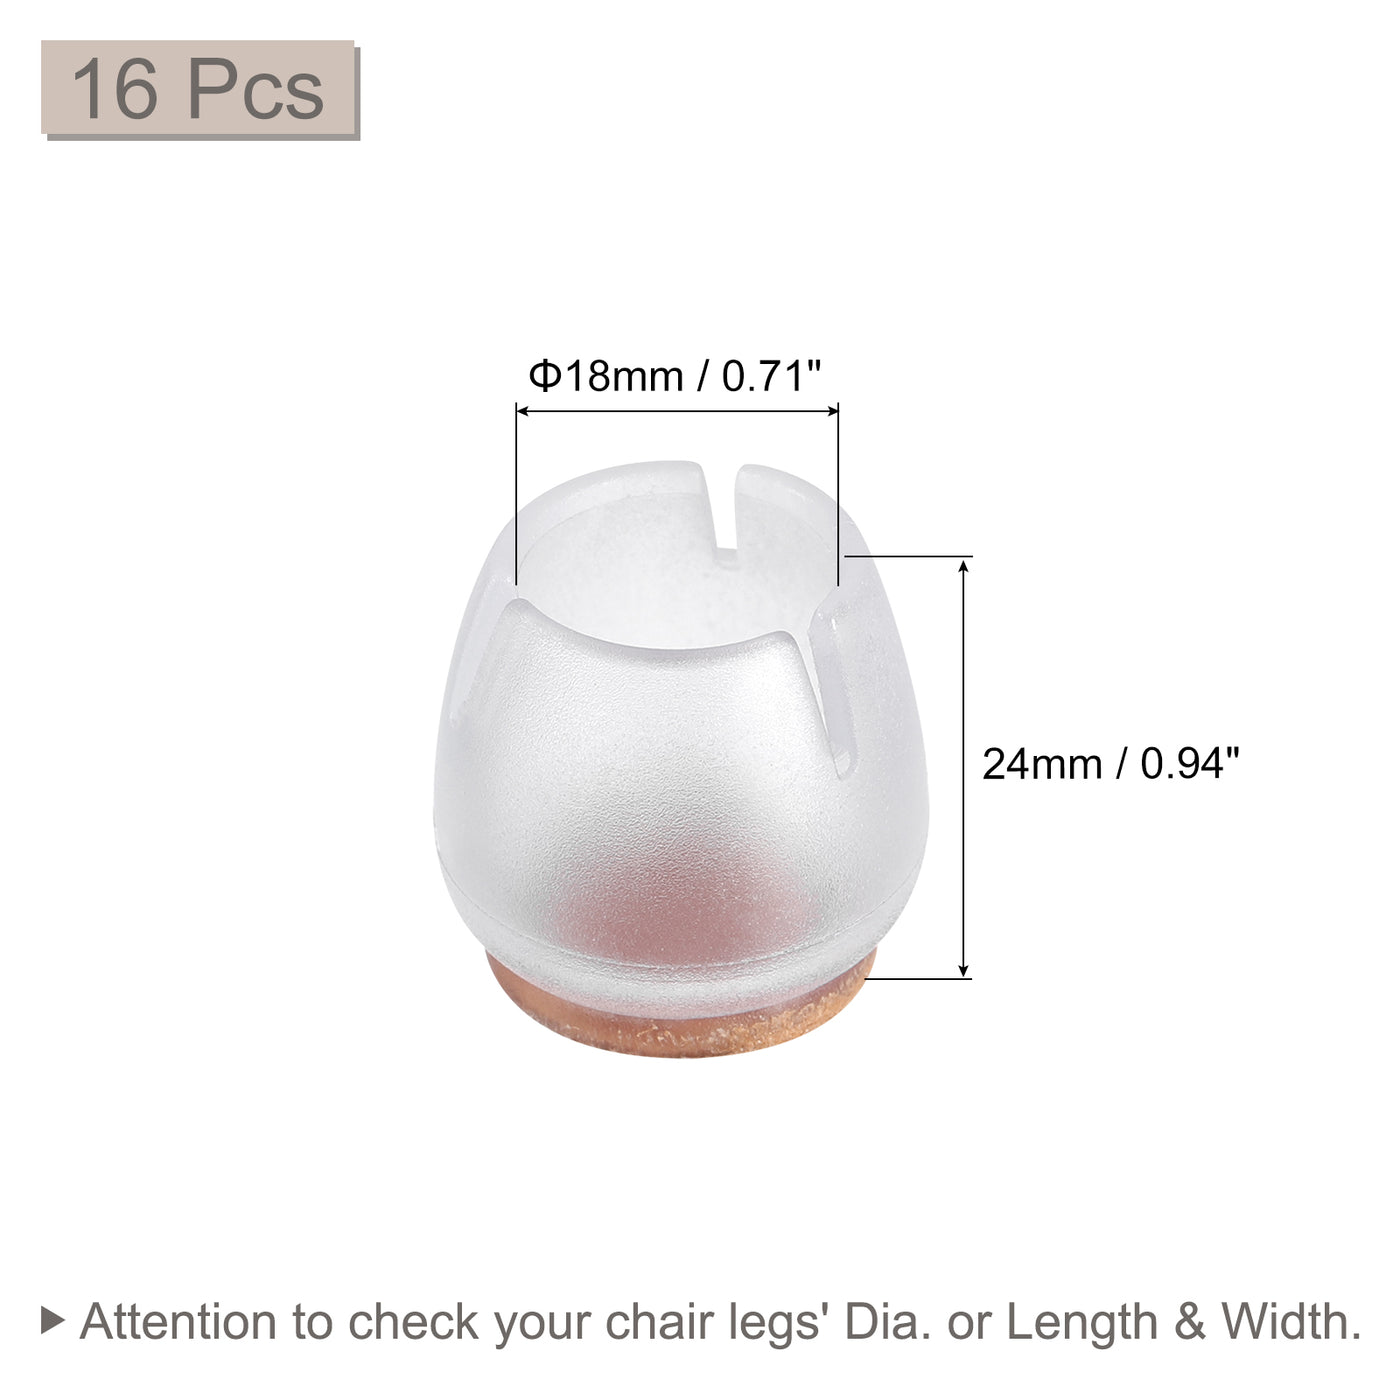 uxcell Uxcell Chair Leg Floor Protectors, 16Pcs 18mm(0.71") PVC & Felt Chair Leg Cover Caps for Hardwood Floors (Clear White)